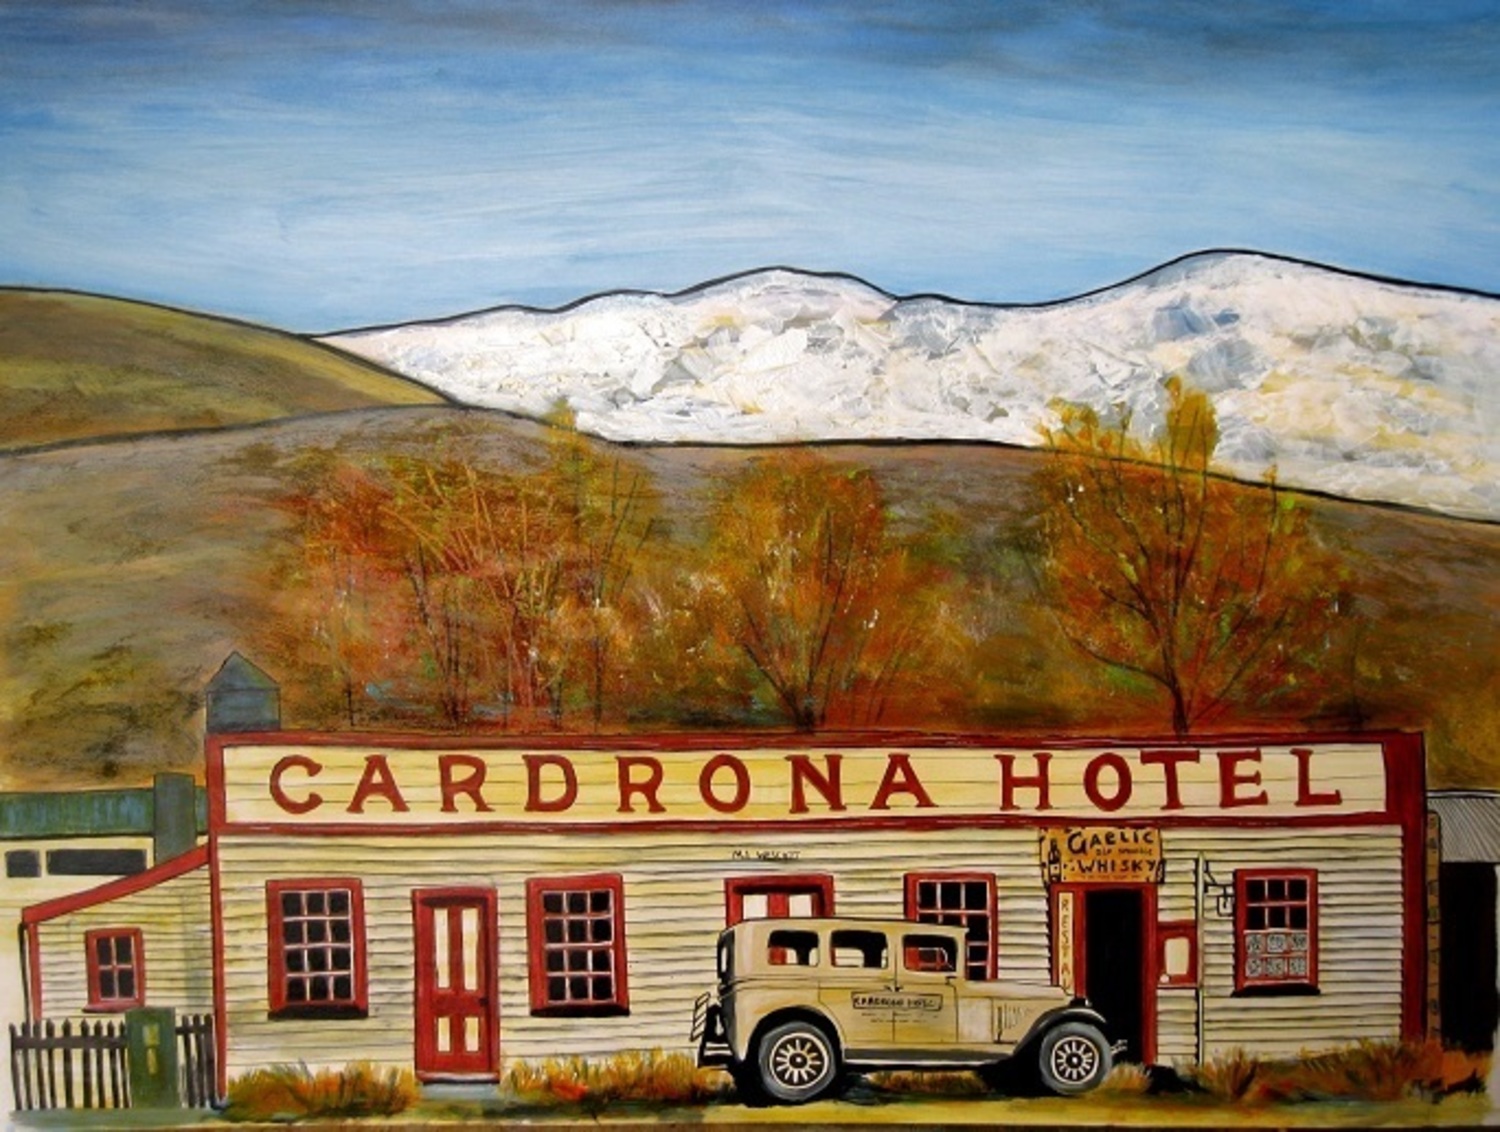 Print - medium - Cardrona Hotel